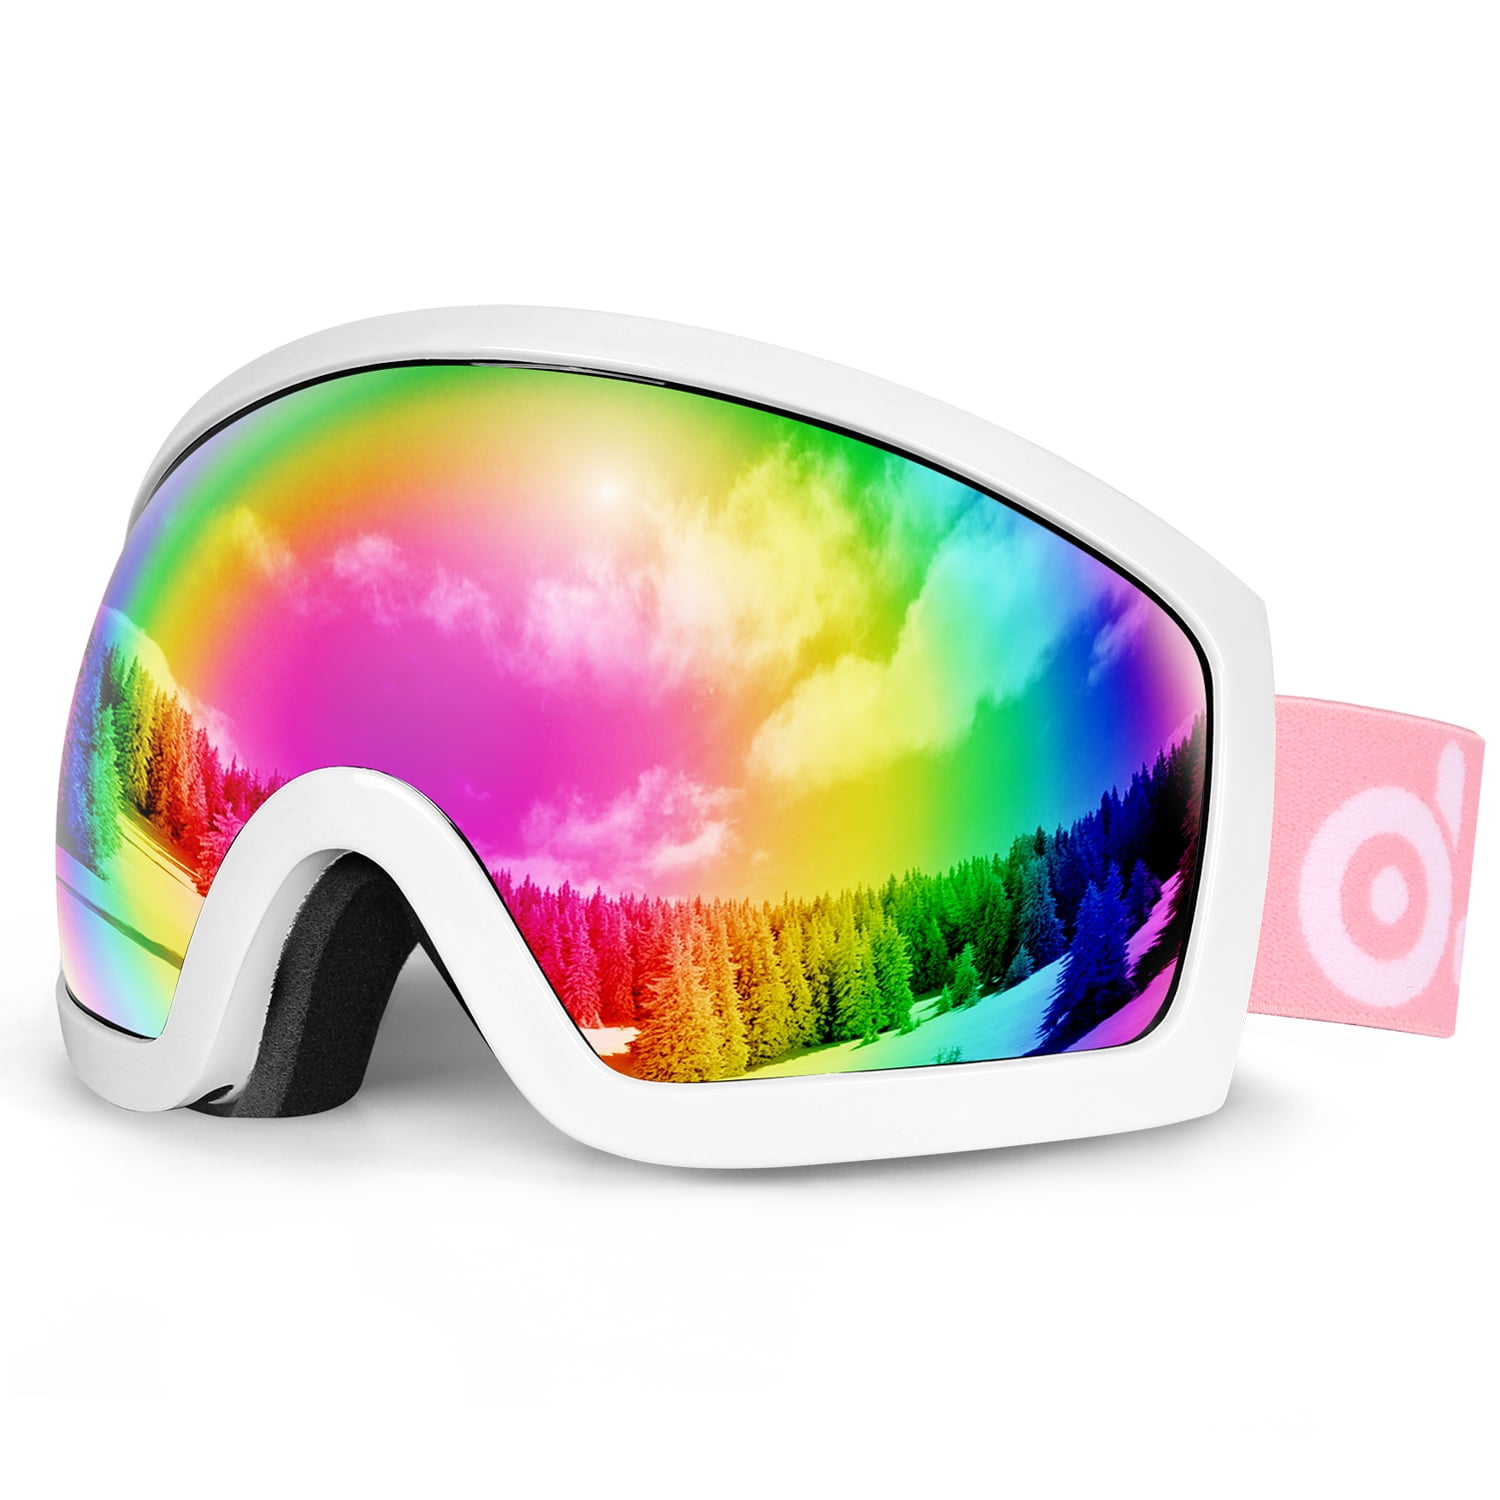 Ravs Skibrille Snowboardbrille Double Lens Antifog Snow goggle 